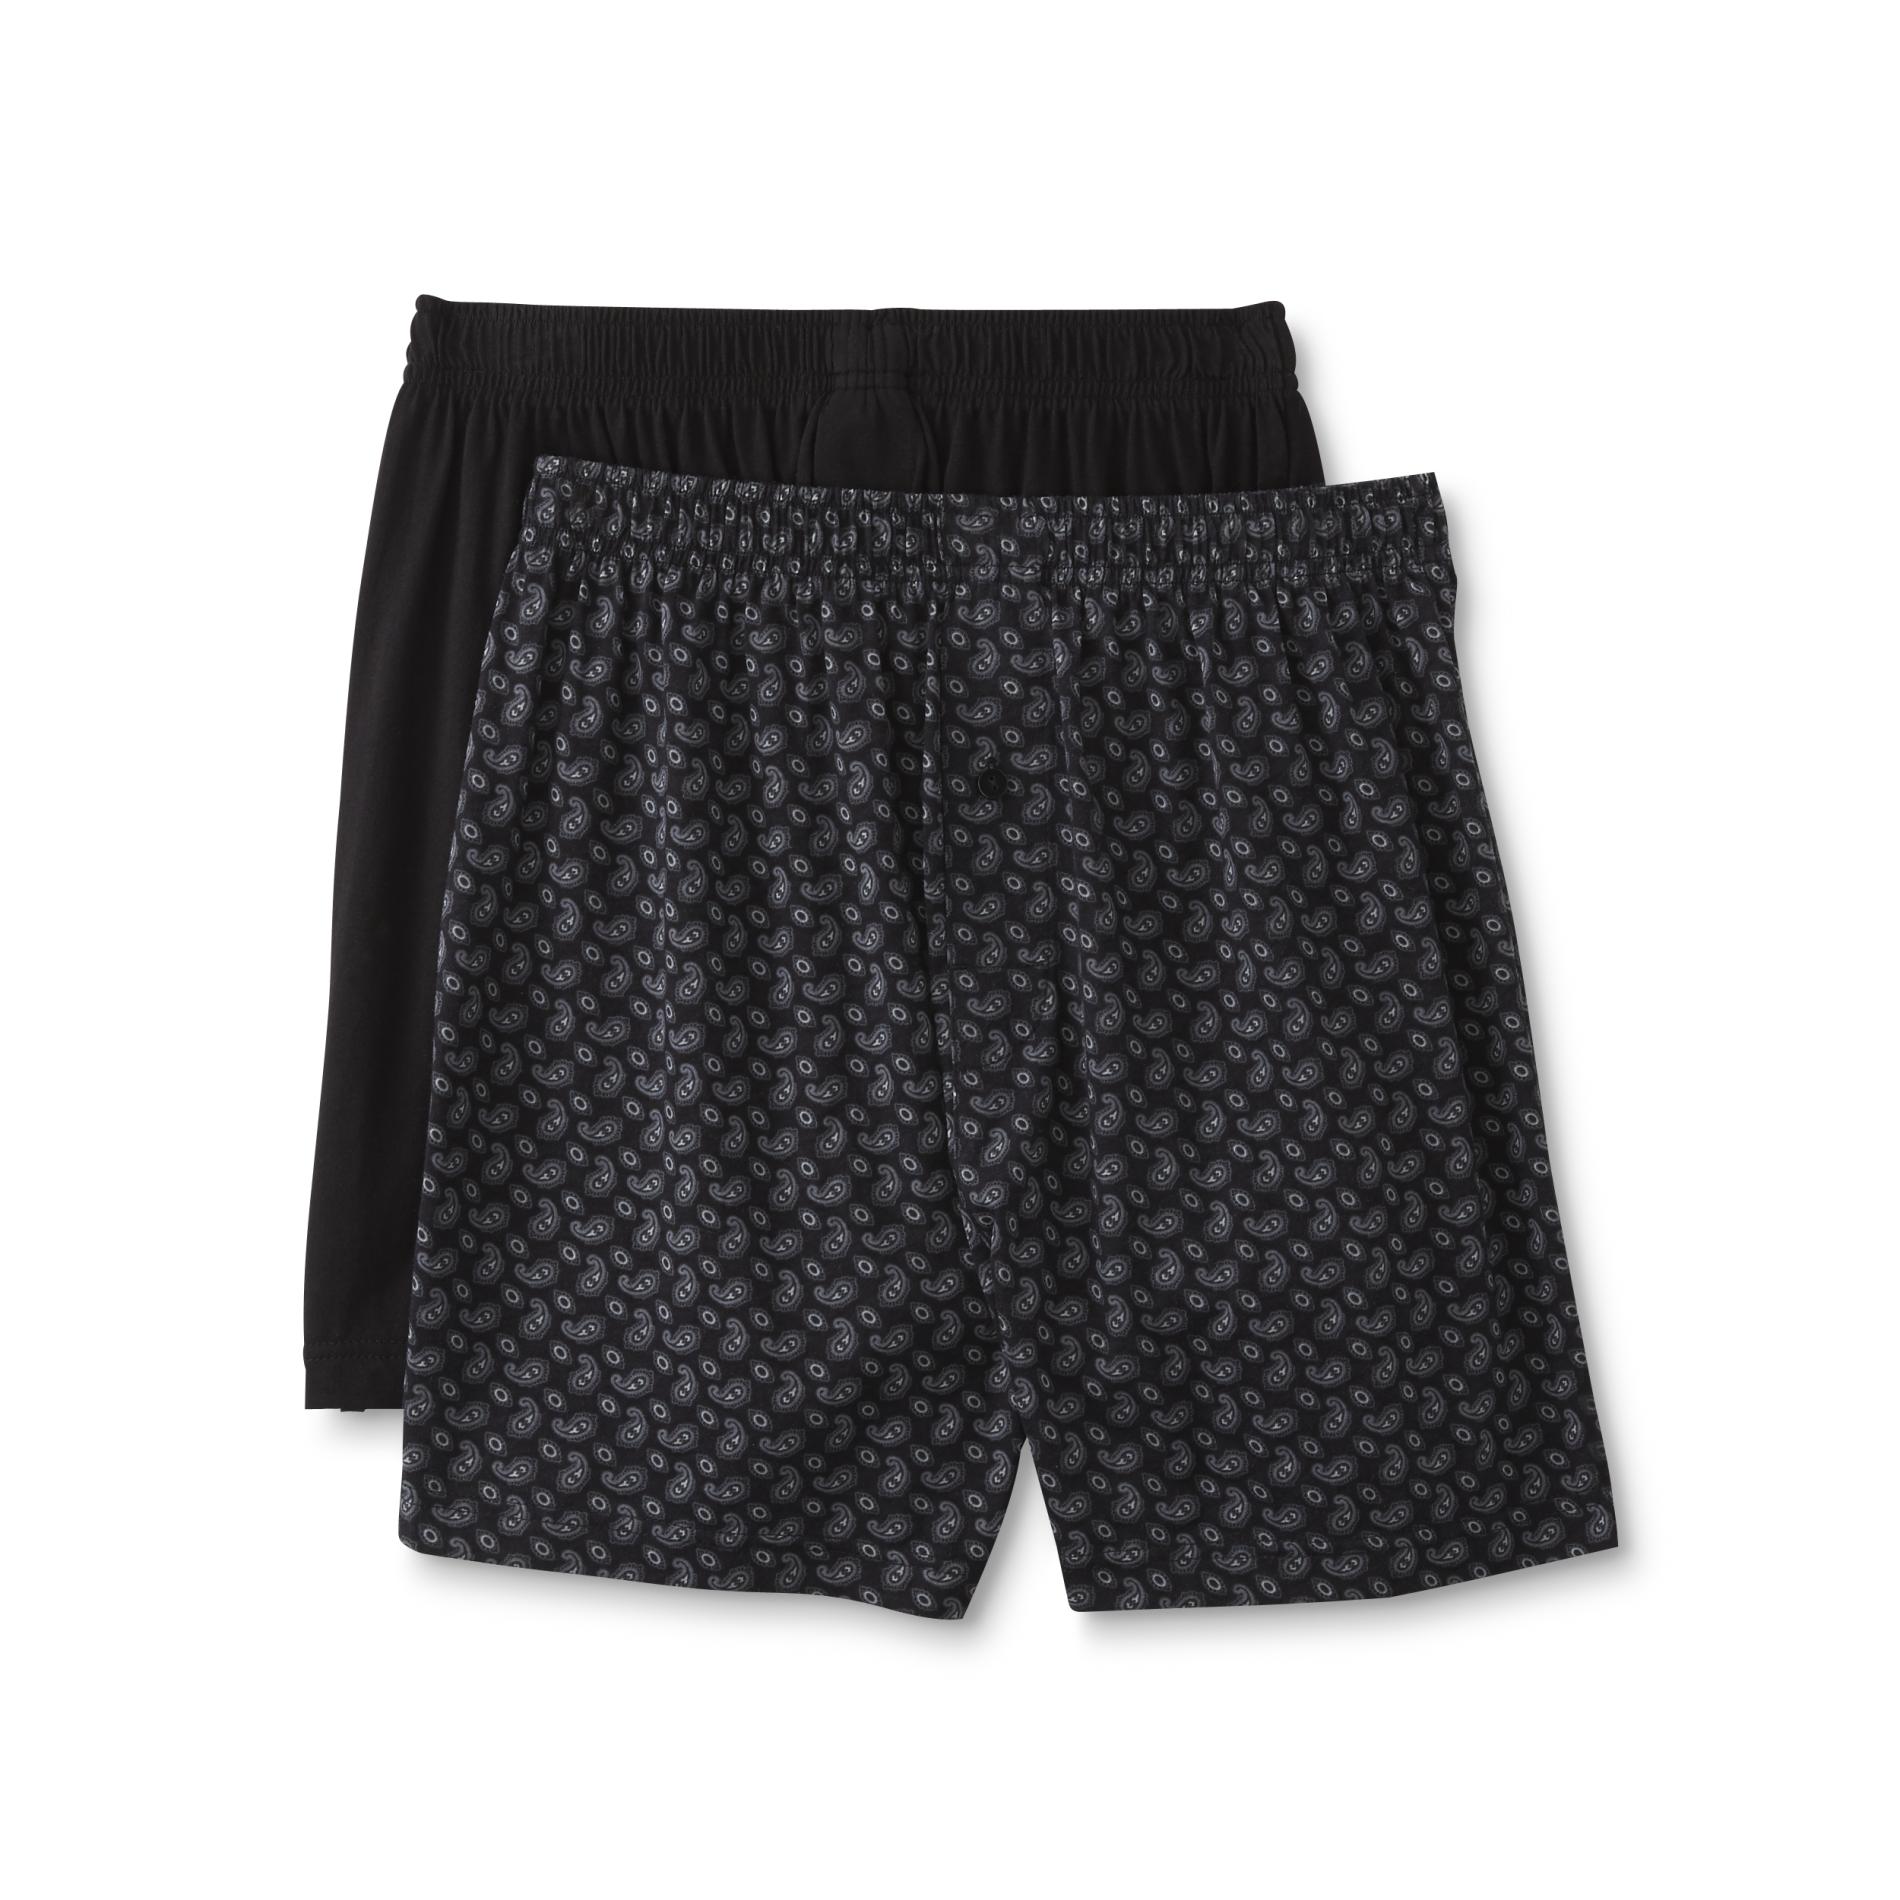 Joe Boxer Men's 2-Pairs Knit Boxer Shorts - Grid & Solid